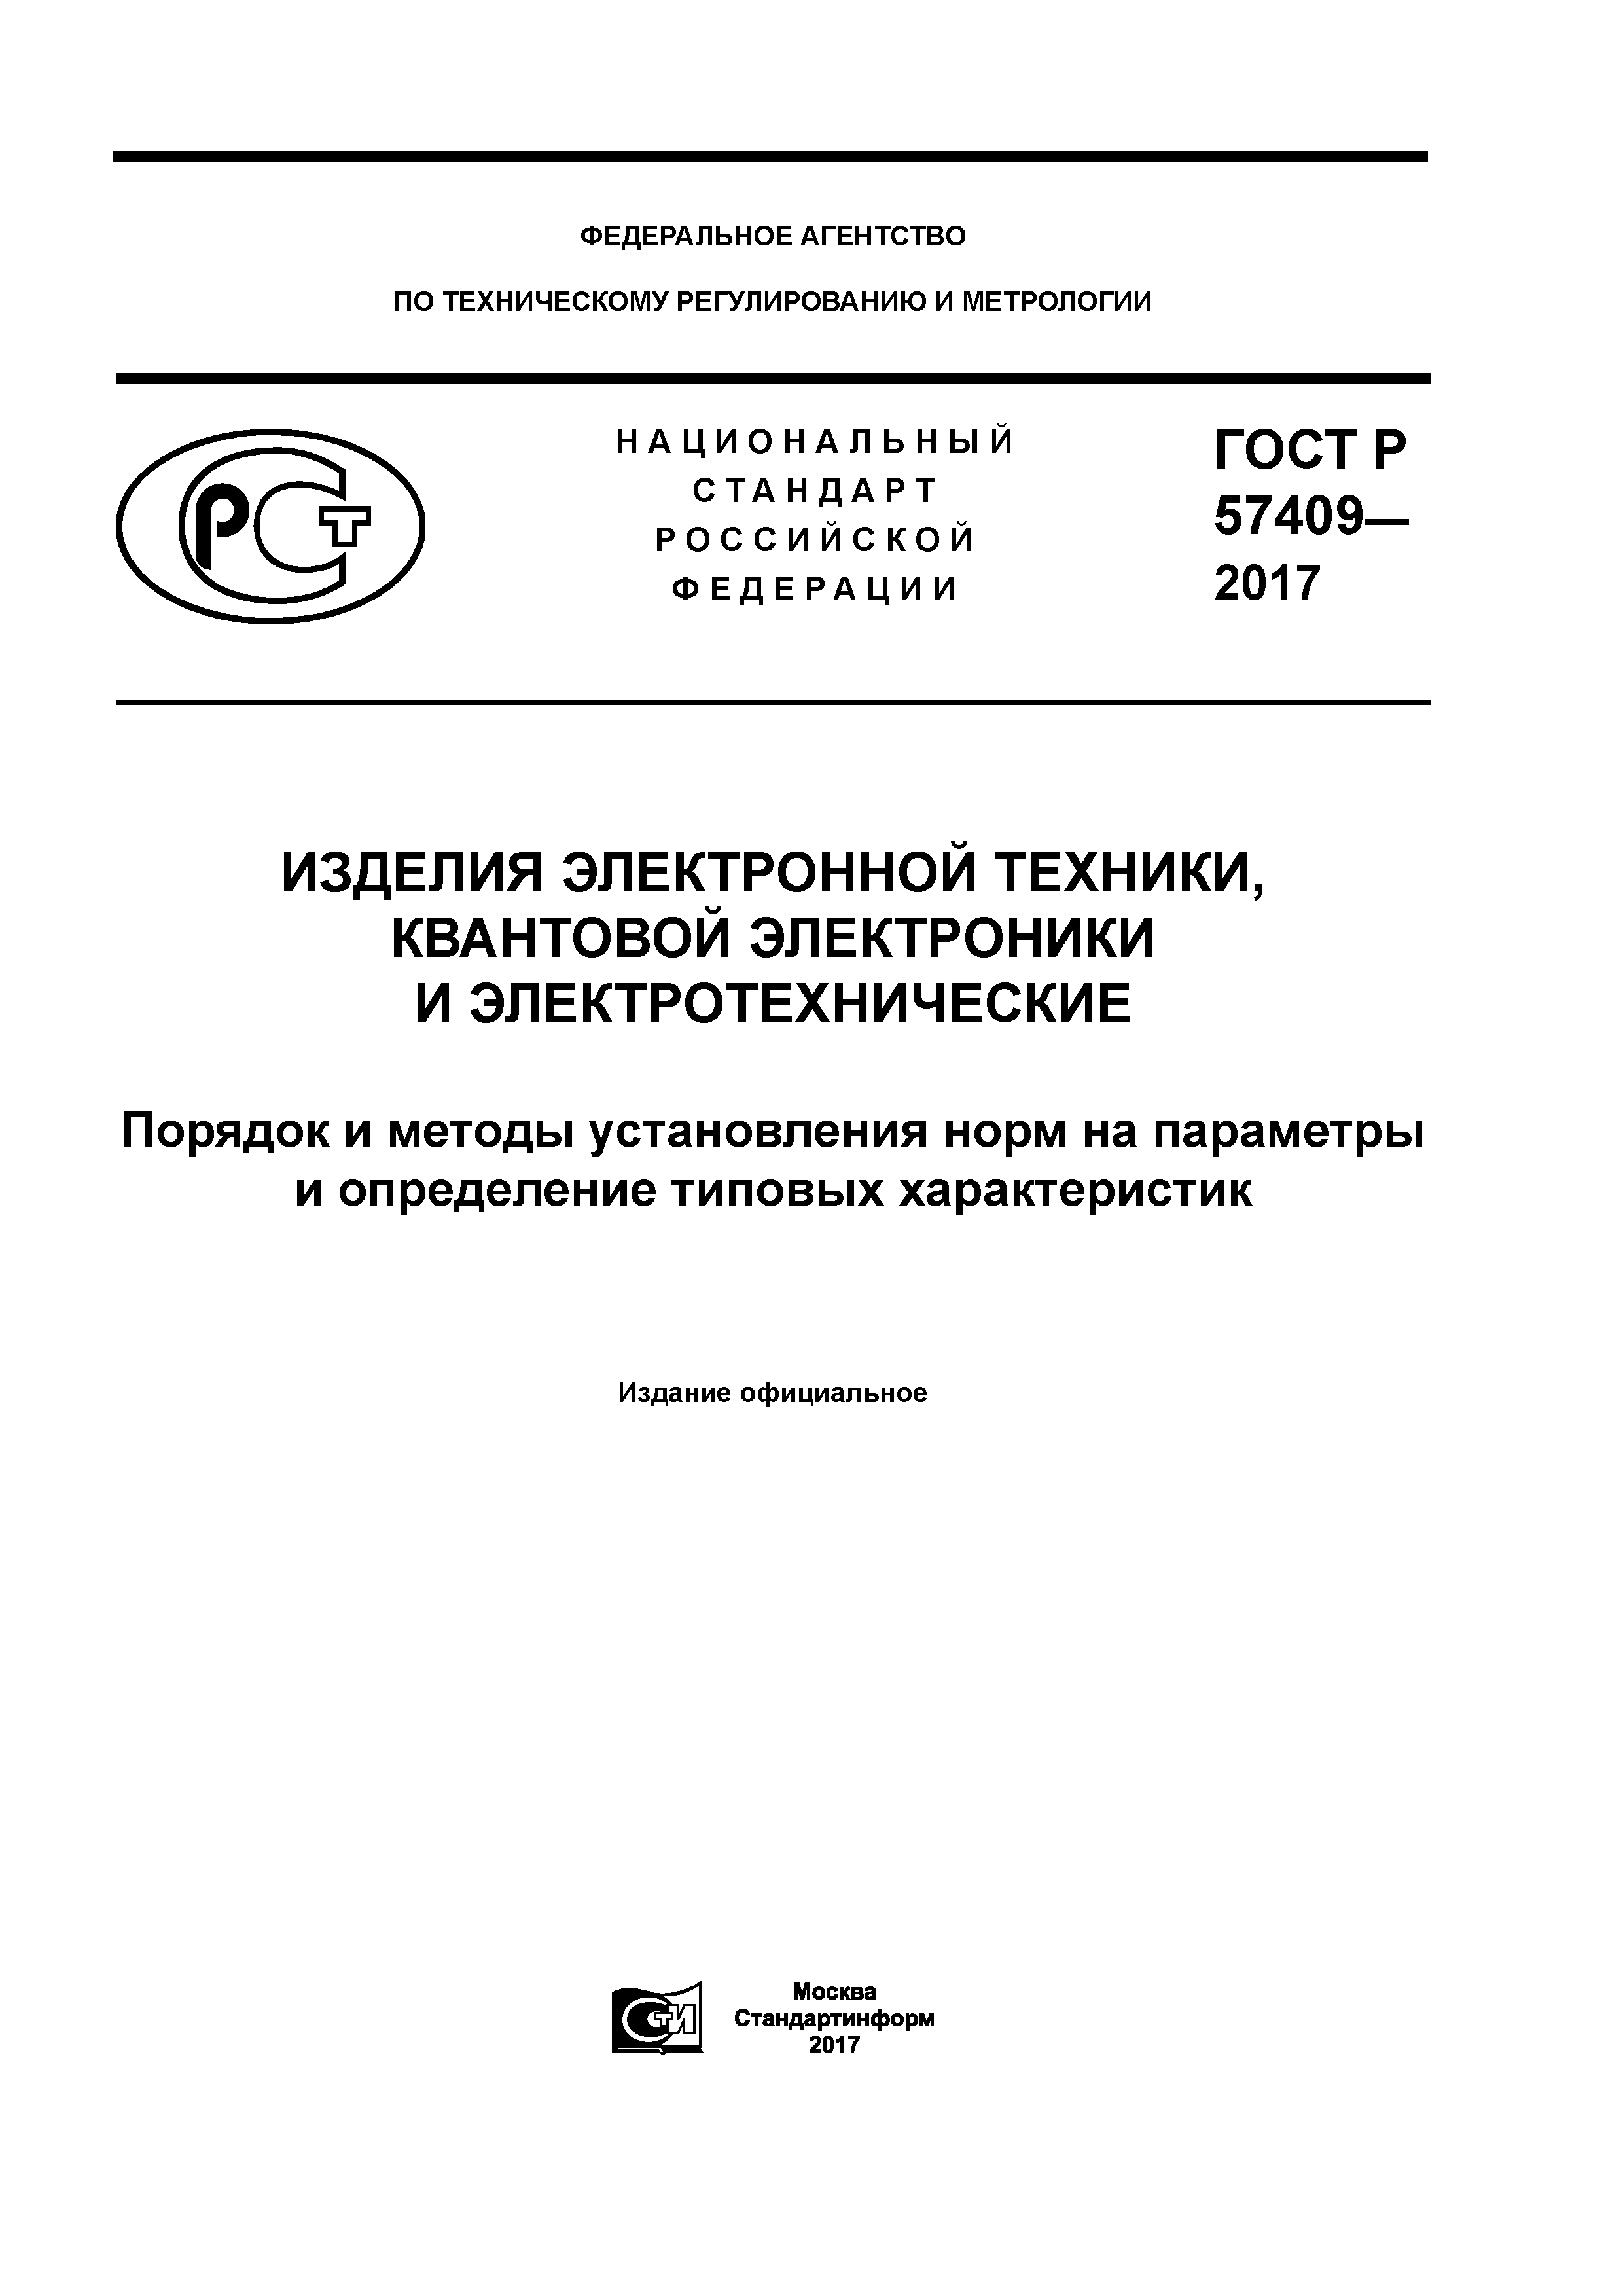 ГОСТ Р 57409-2017